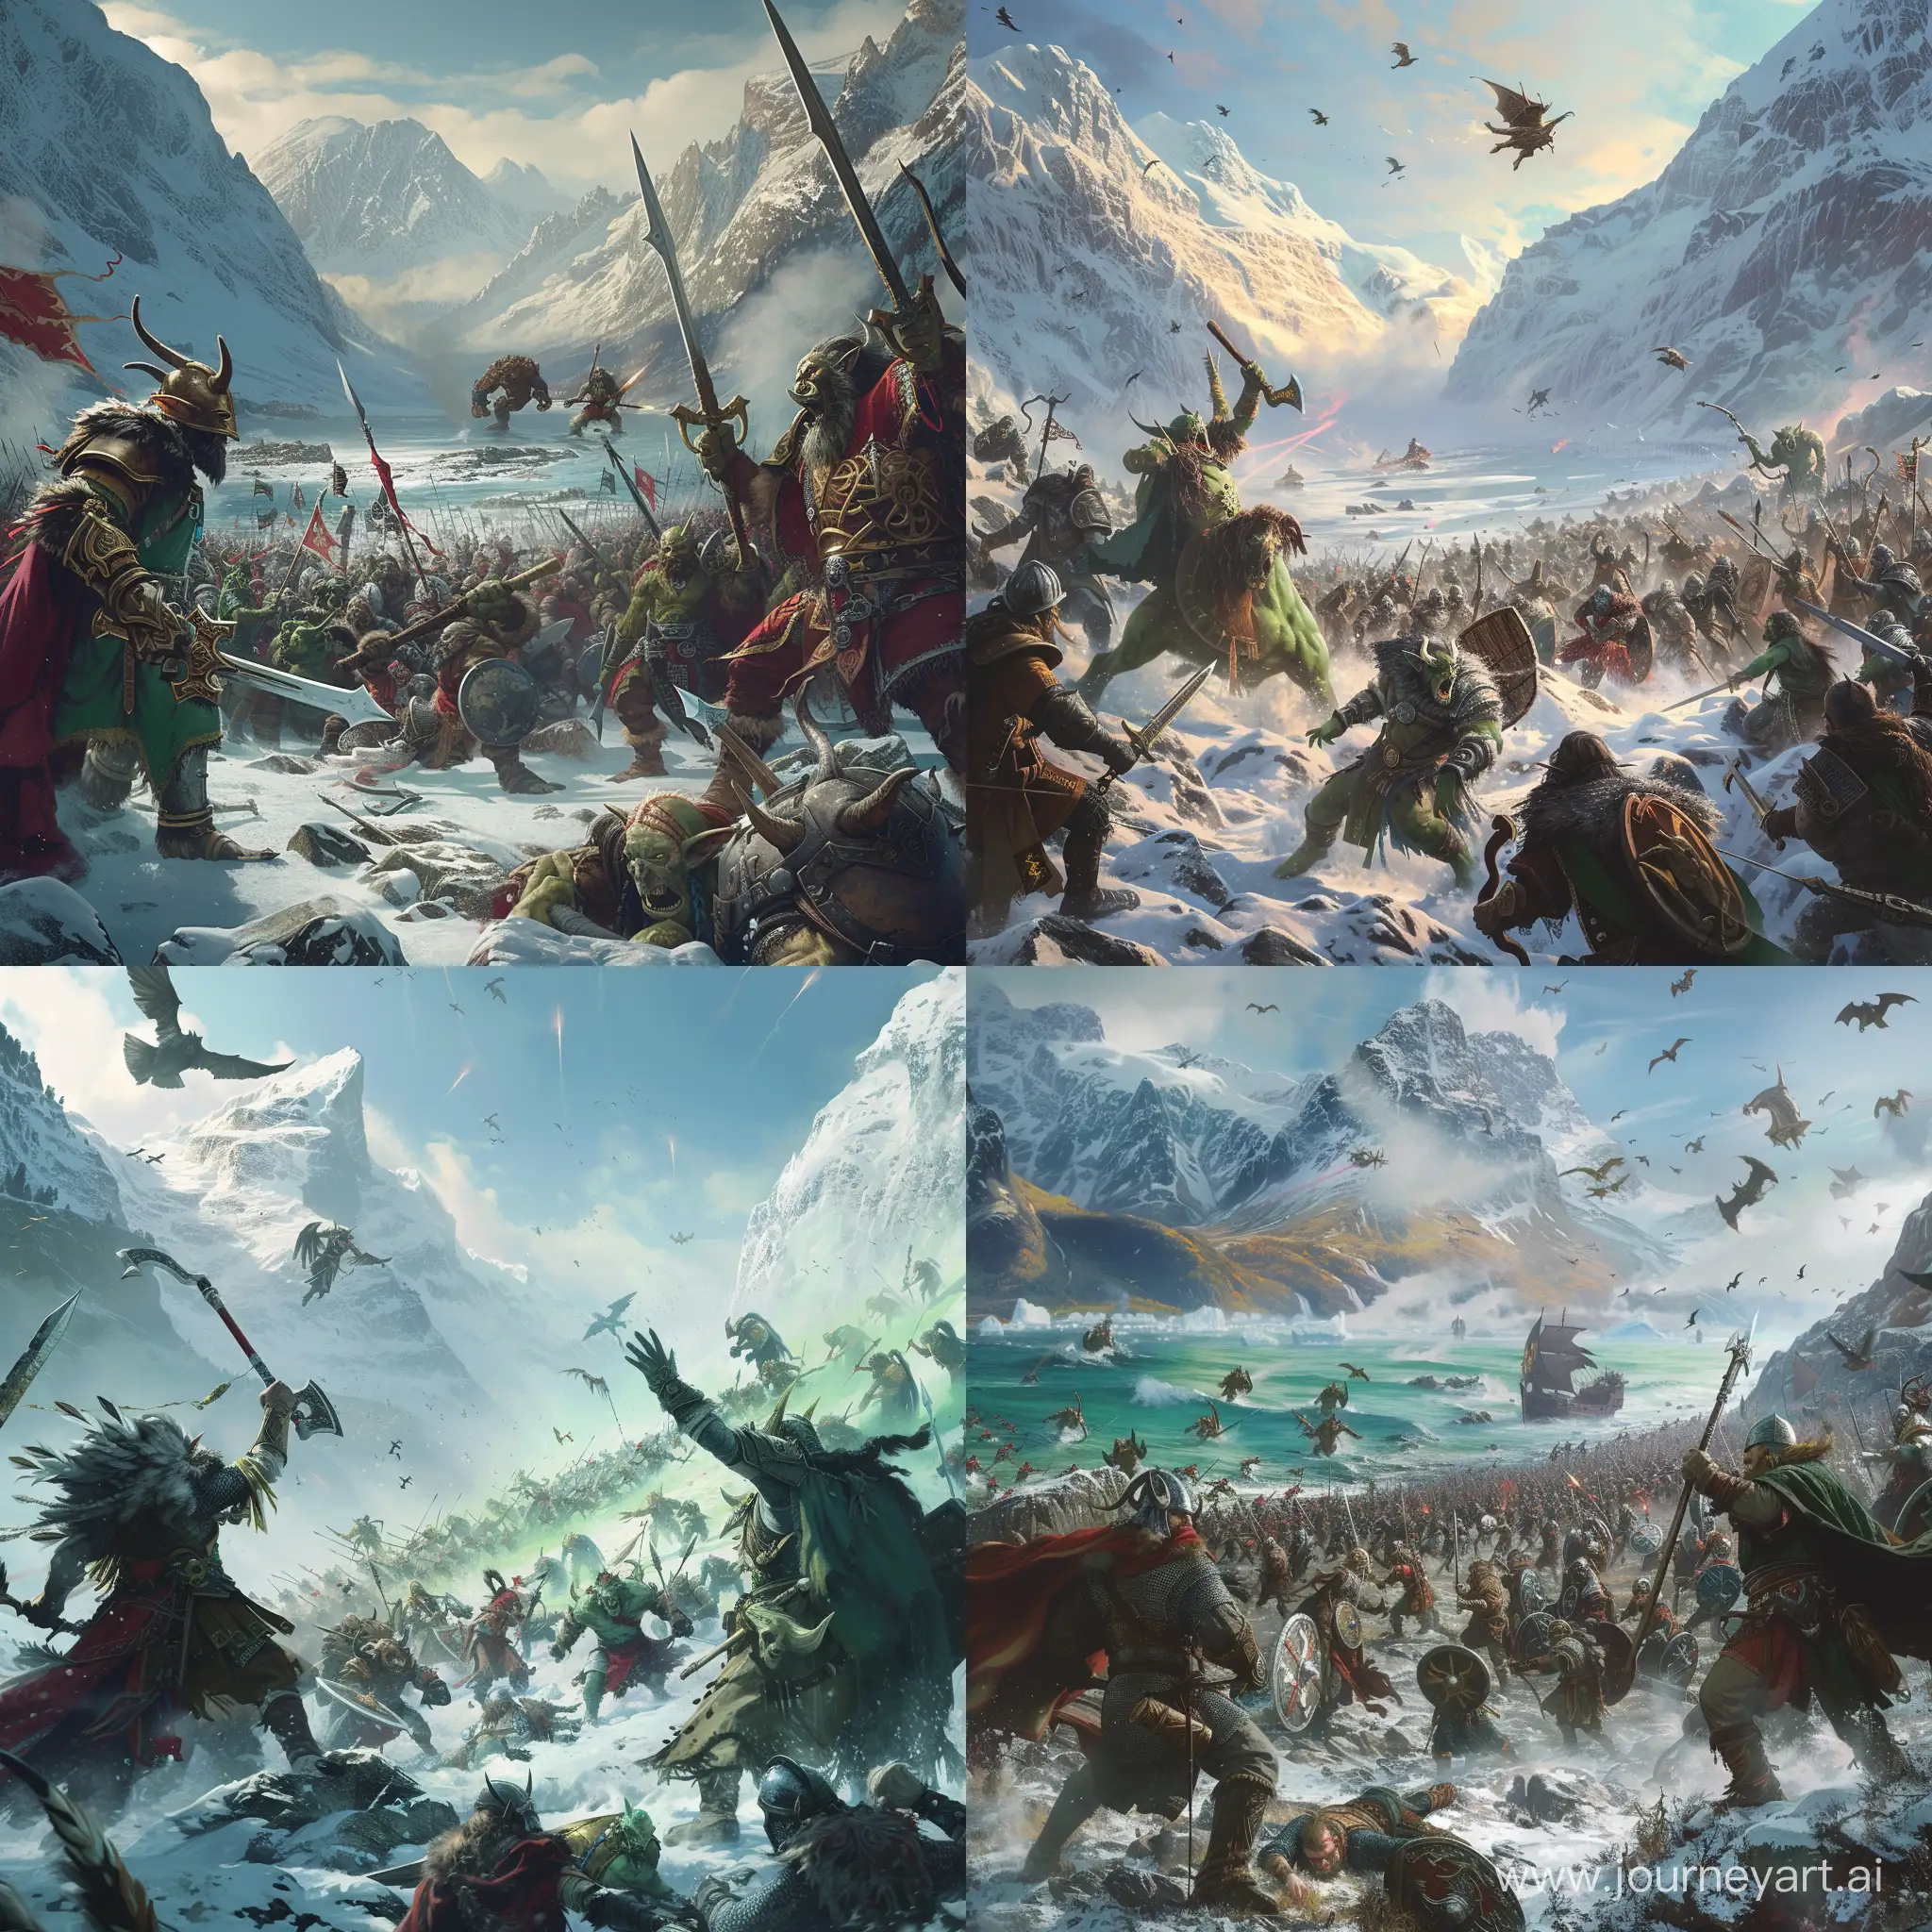 Epic battle in northen fiords bewteen elves and orcs, fantasy, 4k